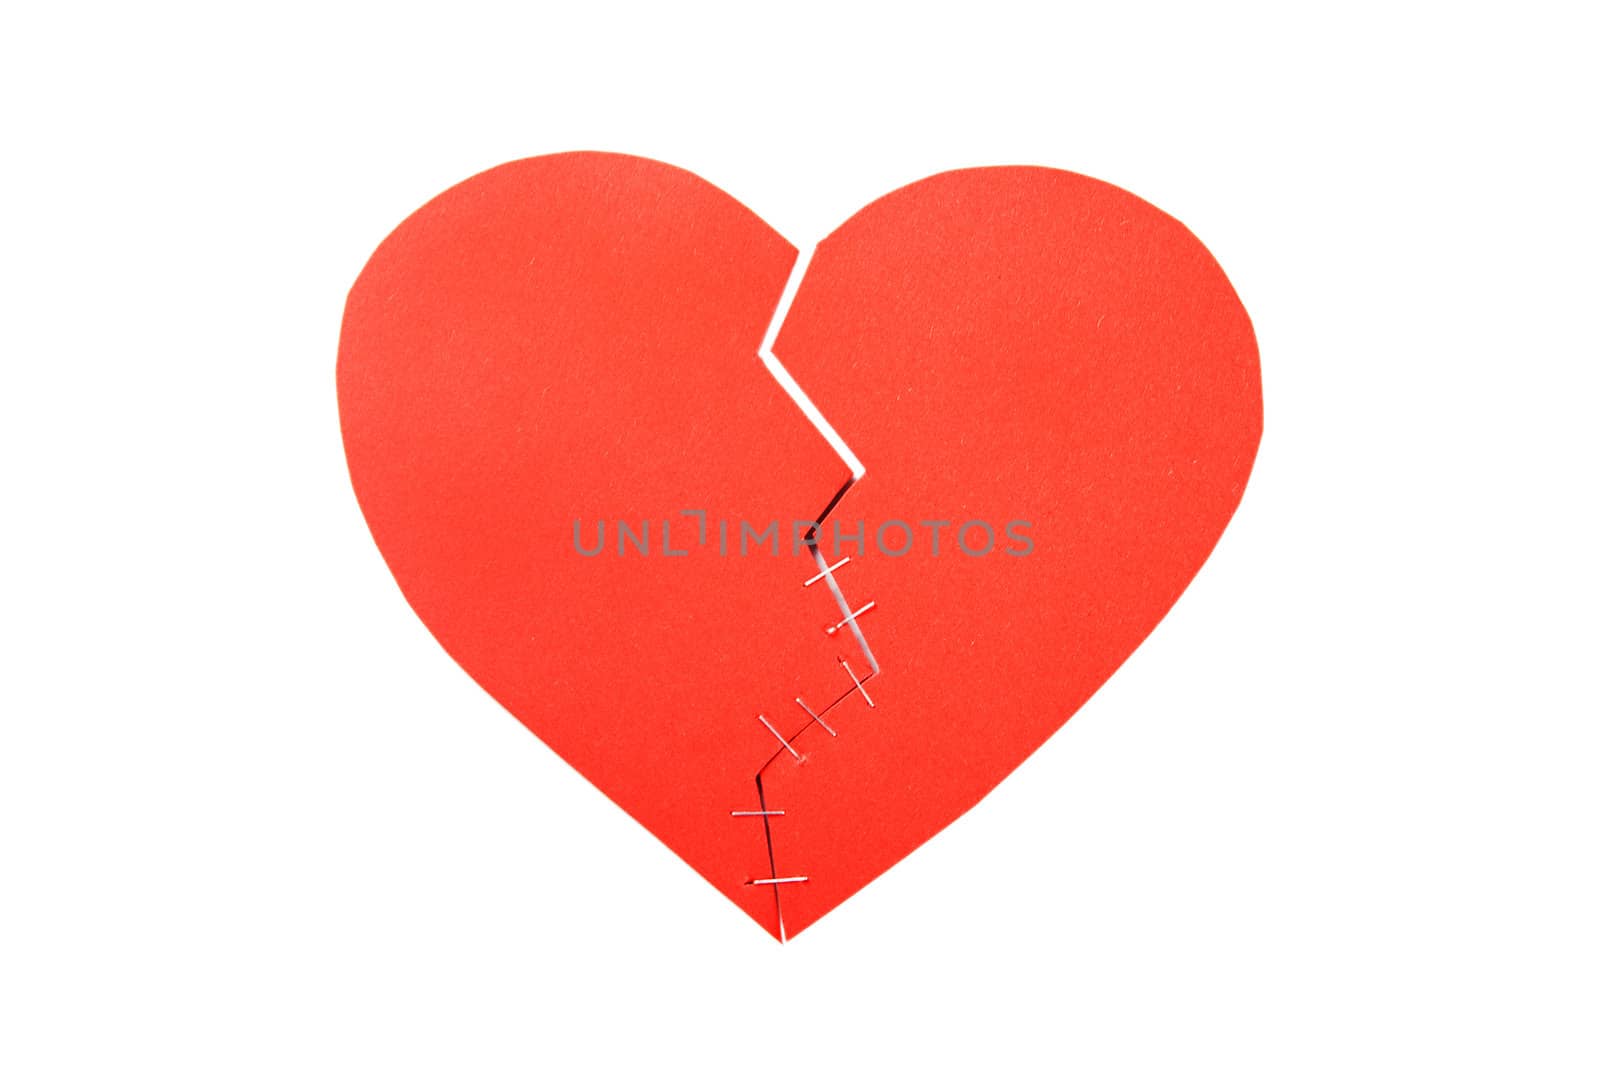 Broken cardboard heart isolated on white background